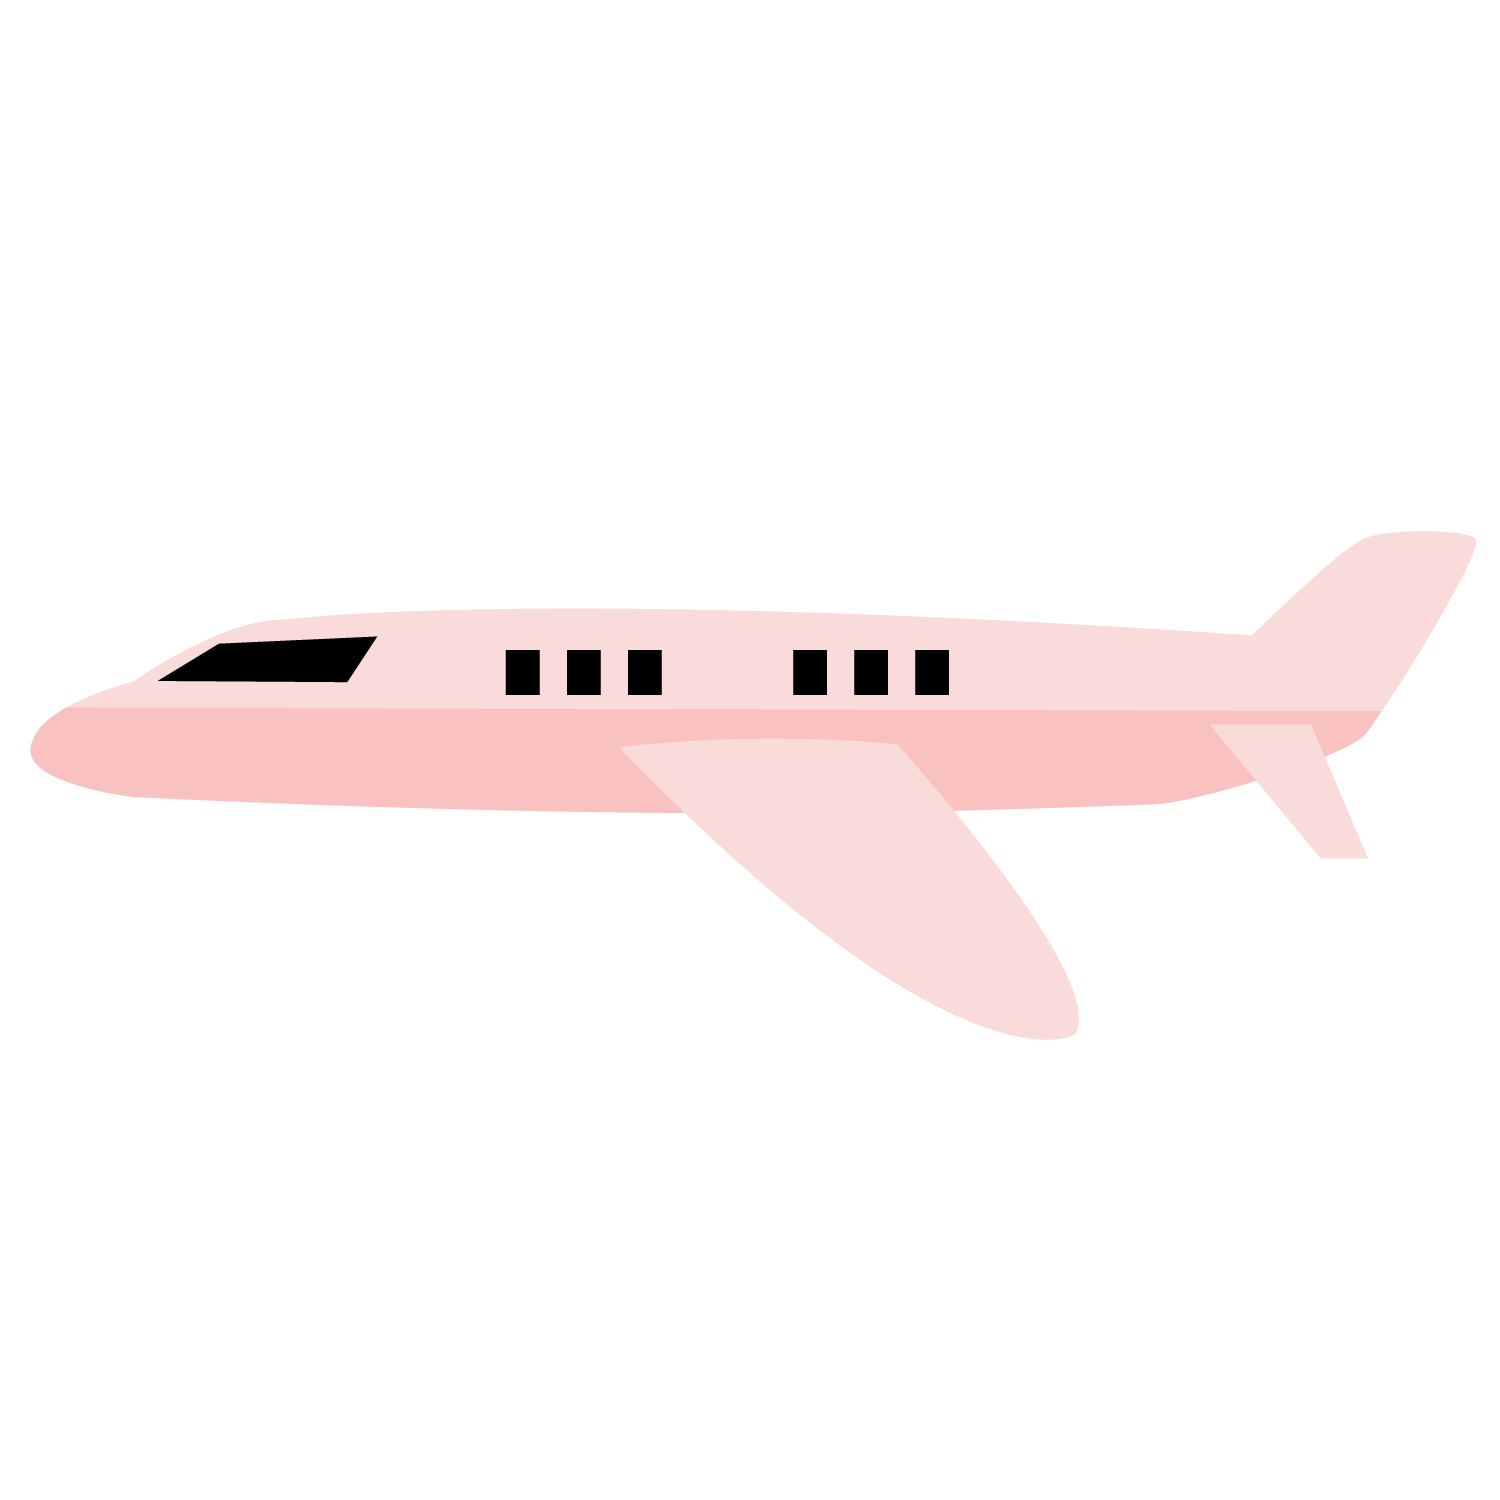 clipart airplane profile